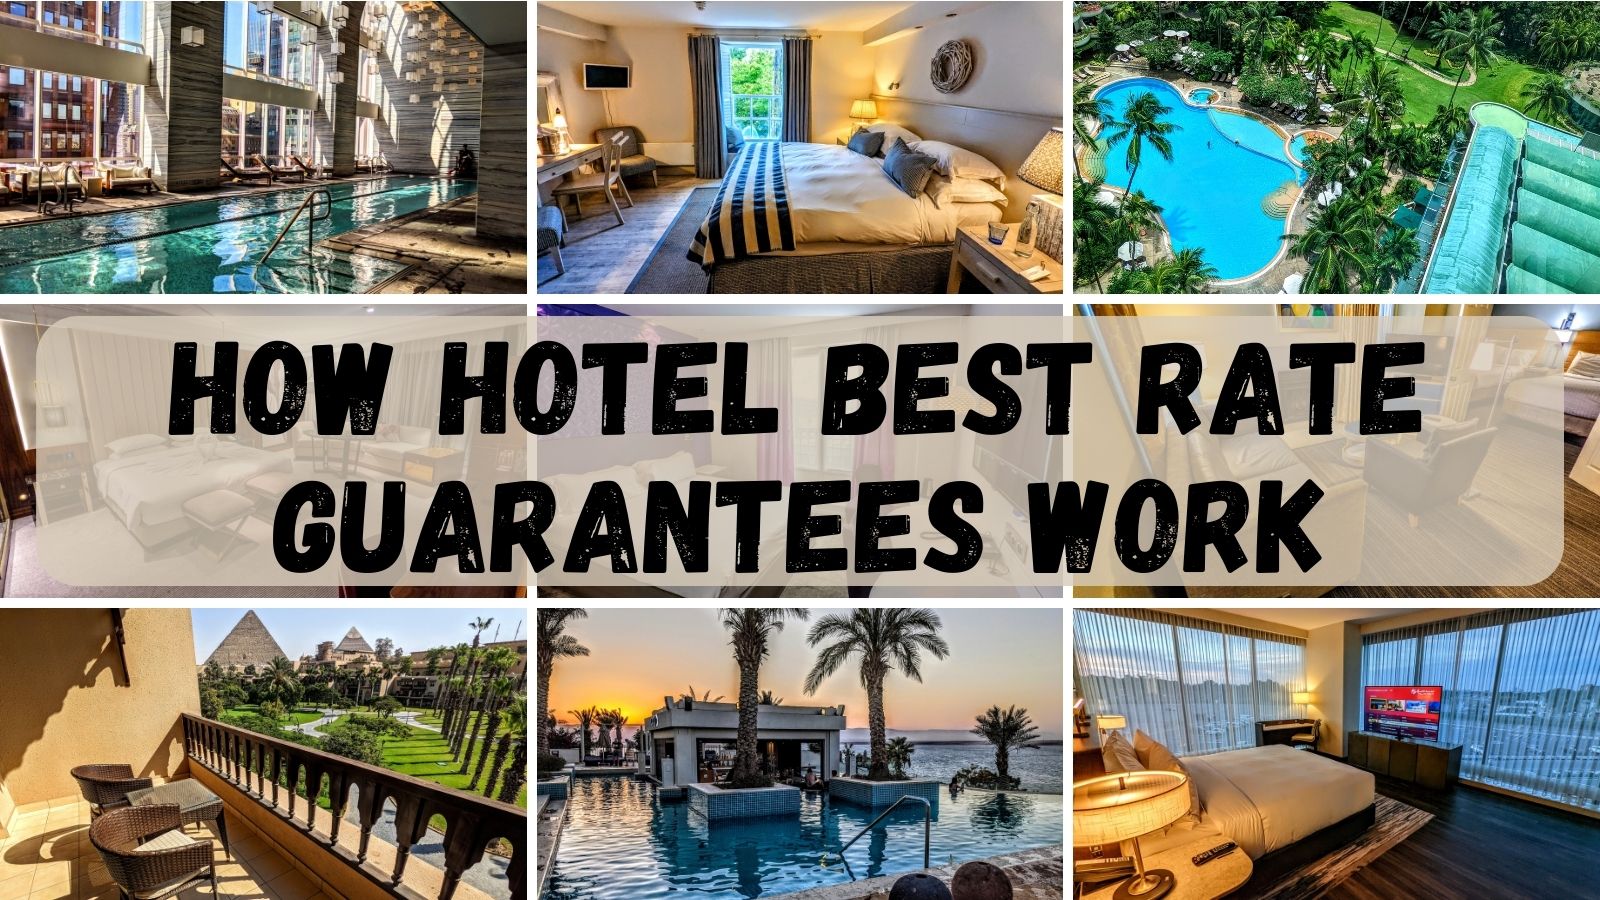 Hotel Best Rate Guarantee